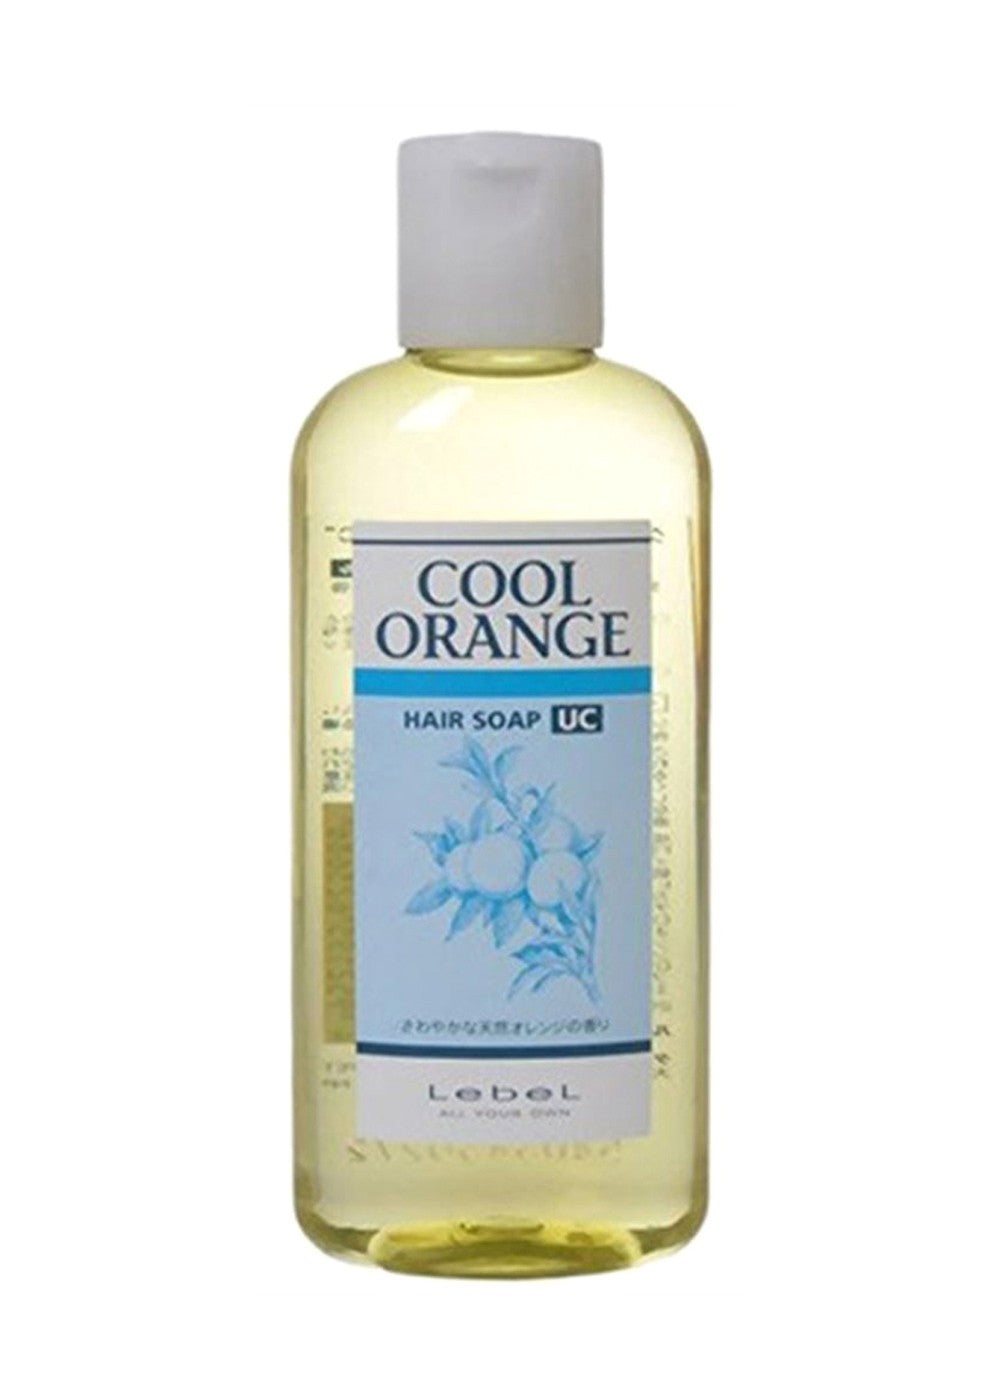 LebeL COOL ORANGE hair soap UC (200ml)